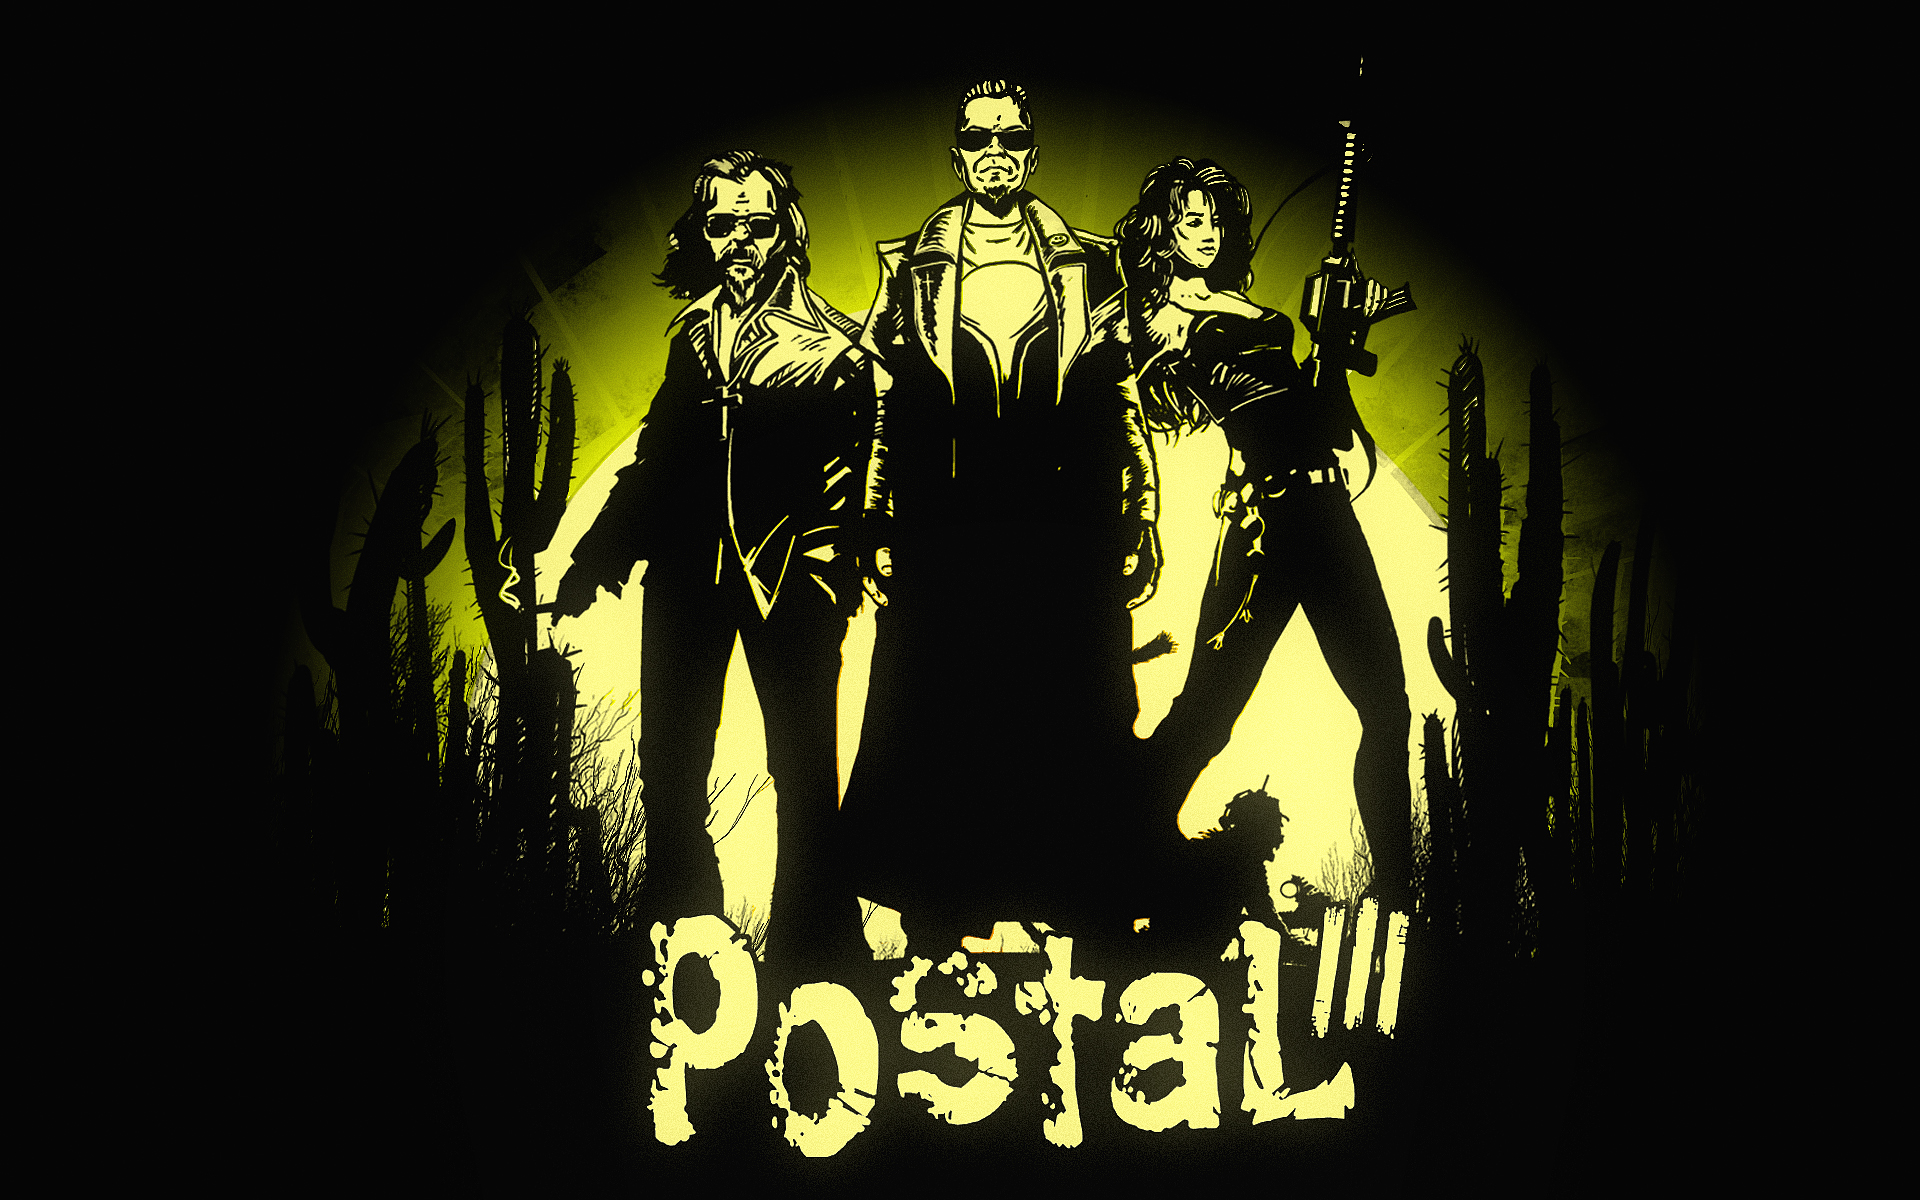 General 1920x1200 Postal postal 3 video games video game art